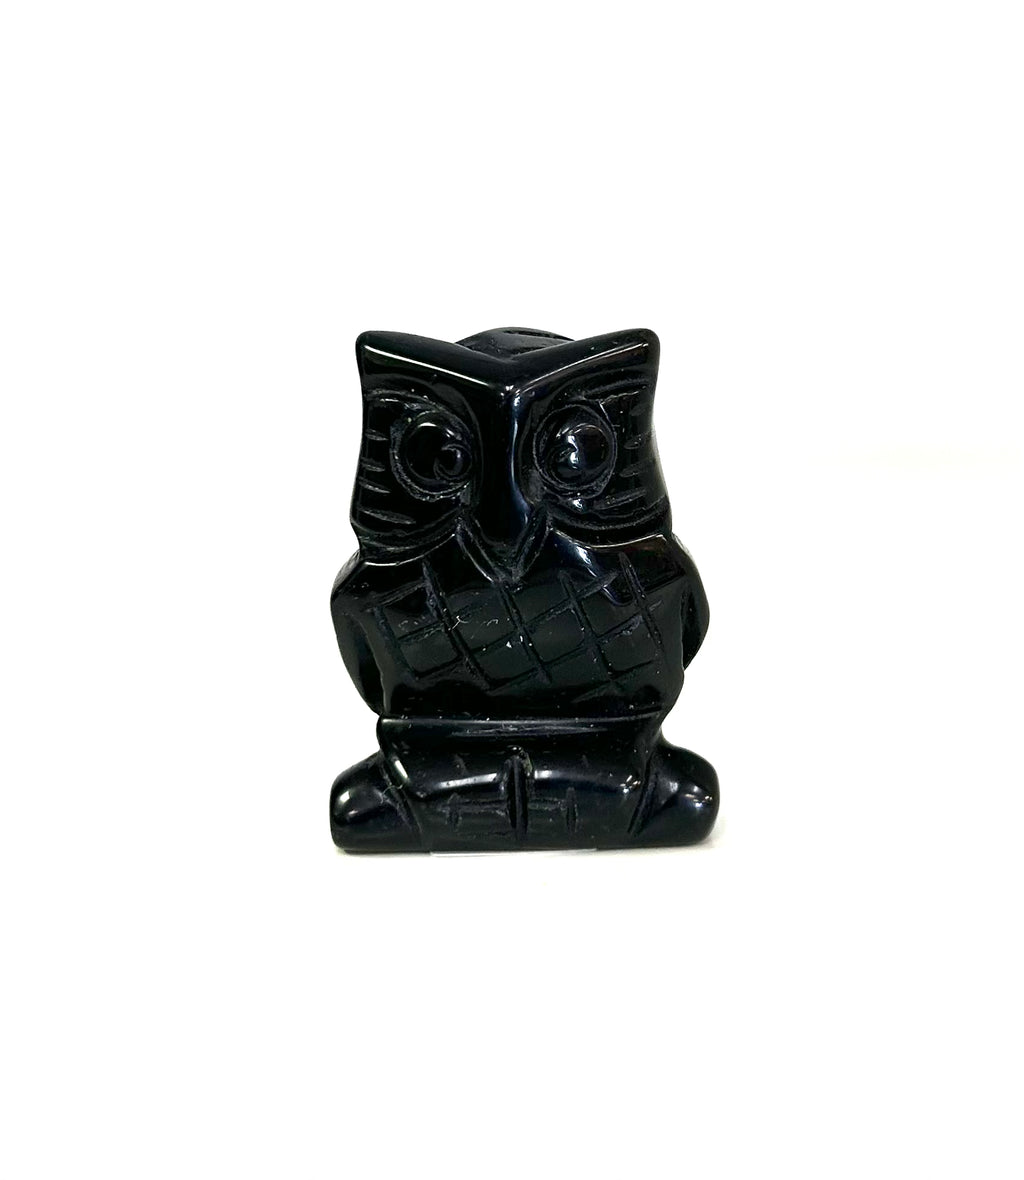 Obsidian Owl - Lighten Up Shop